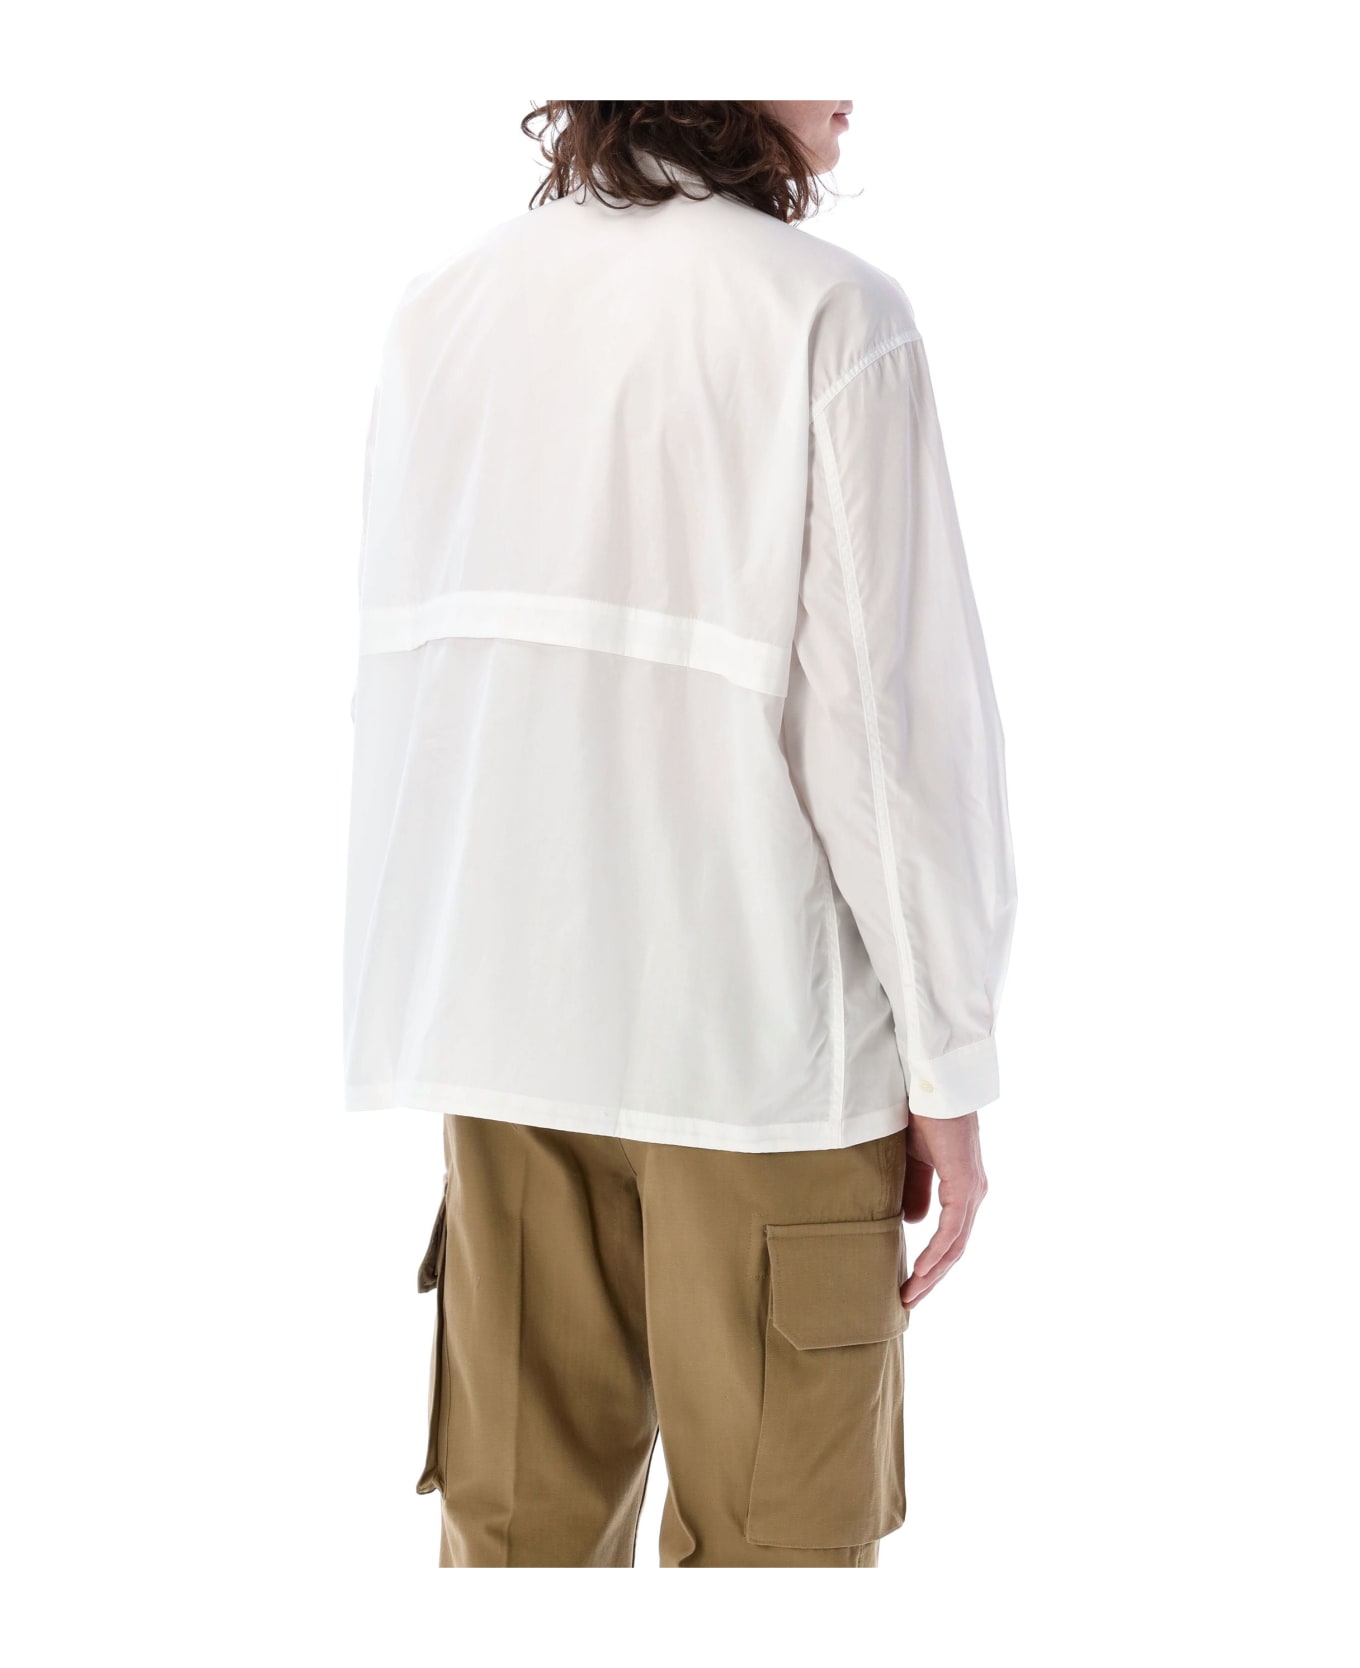 Comme des Garçons Homme Concealed Pockets Shirt - WHITE